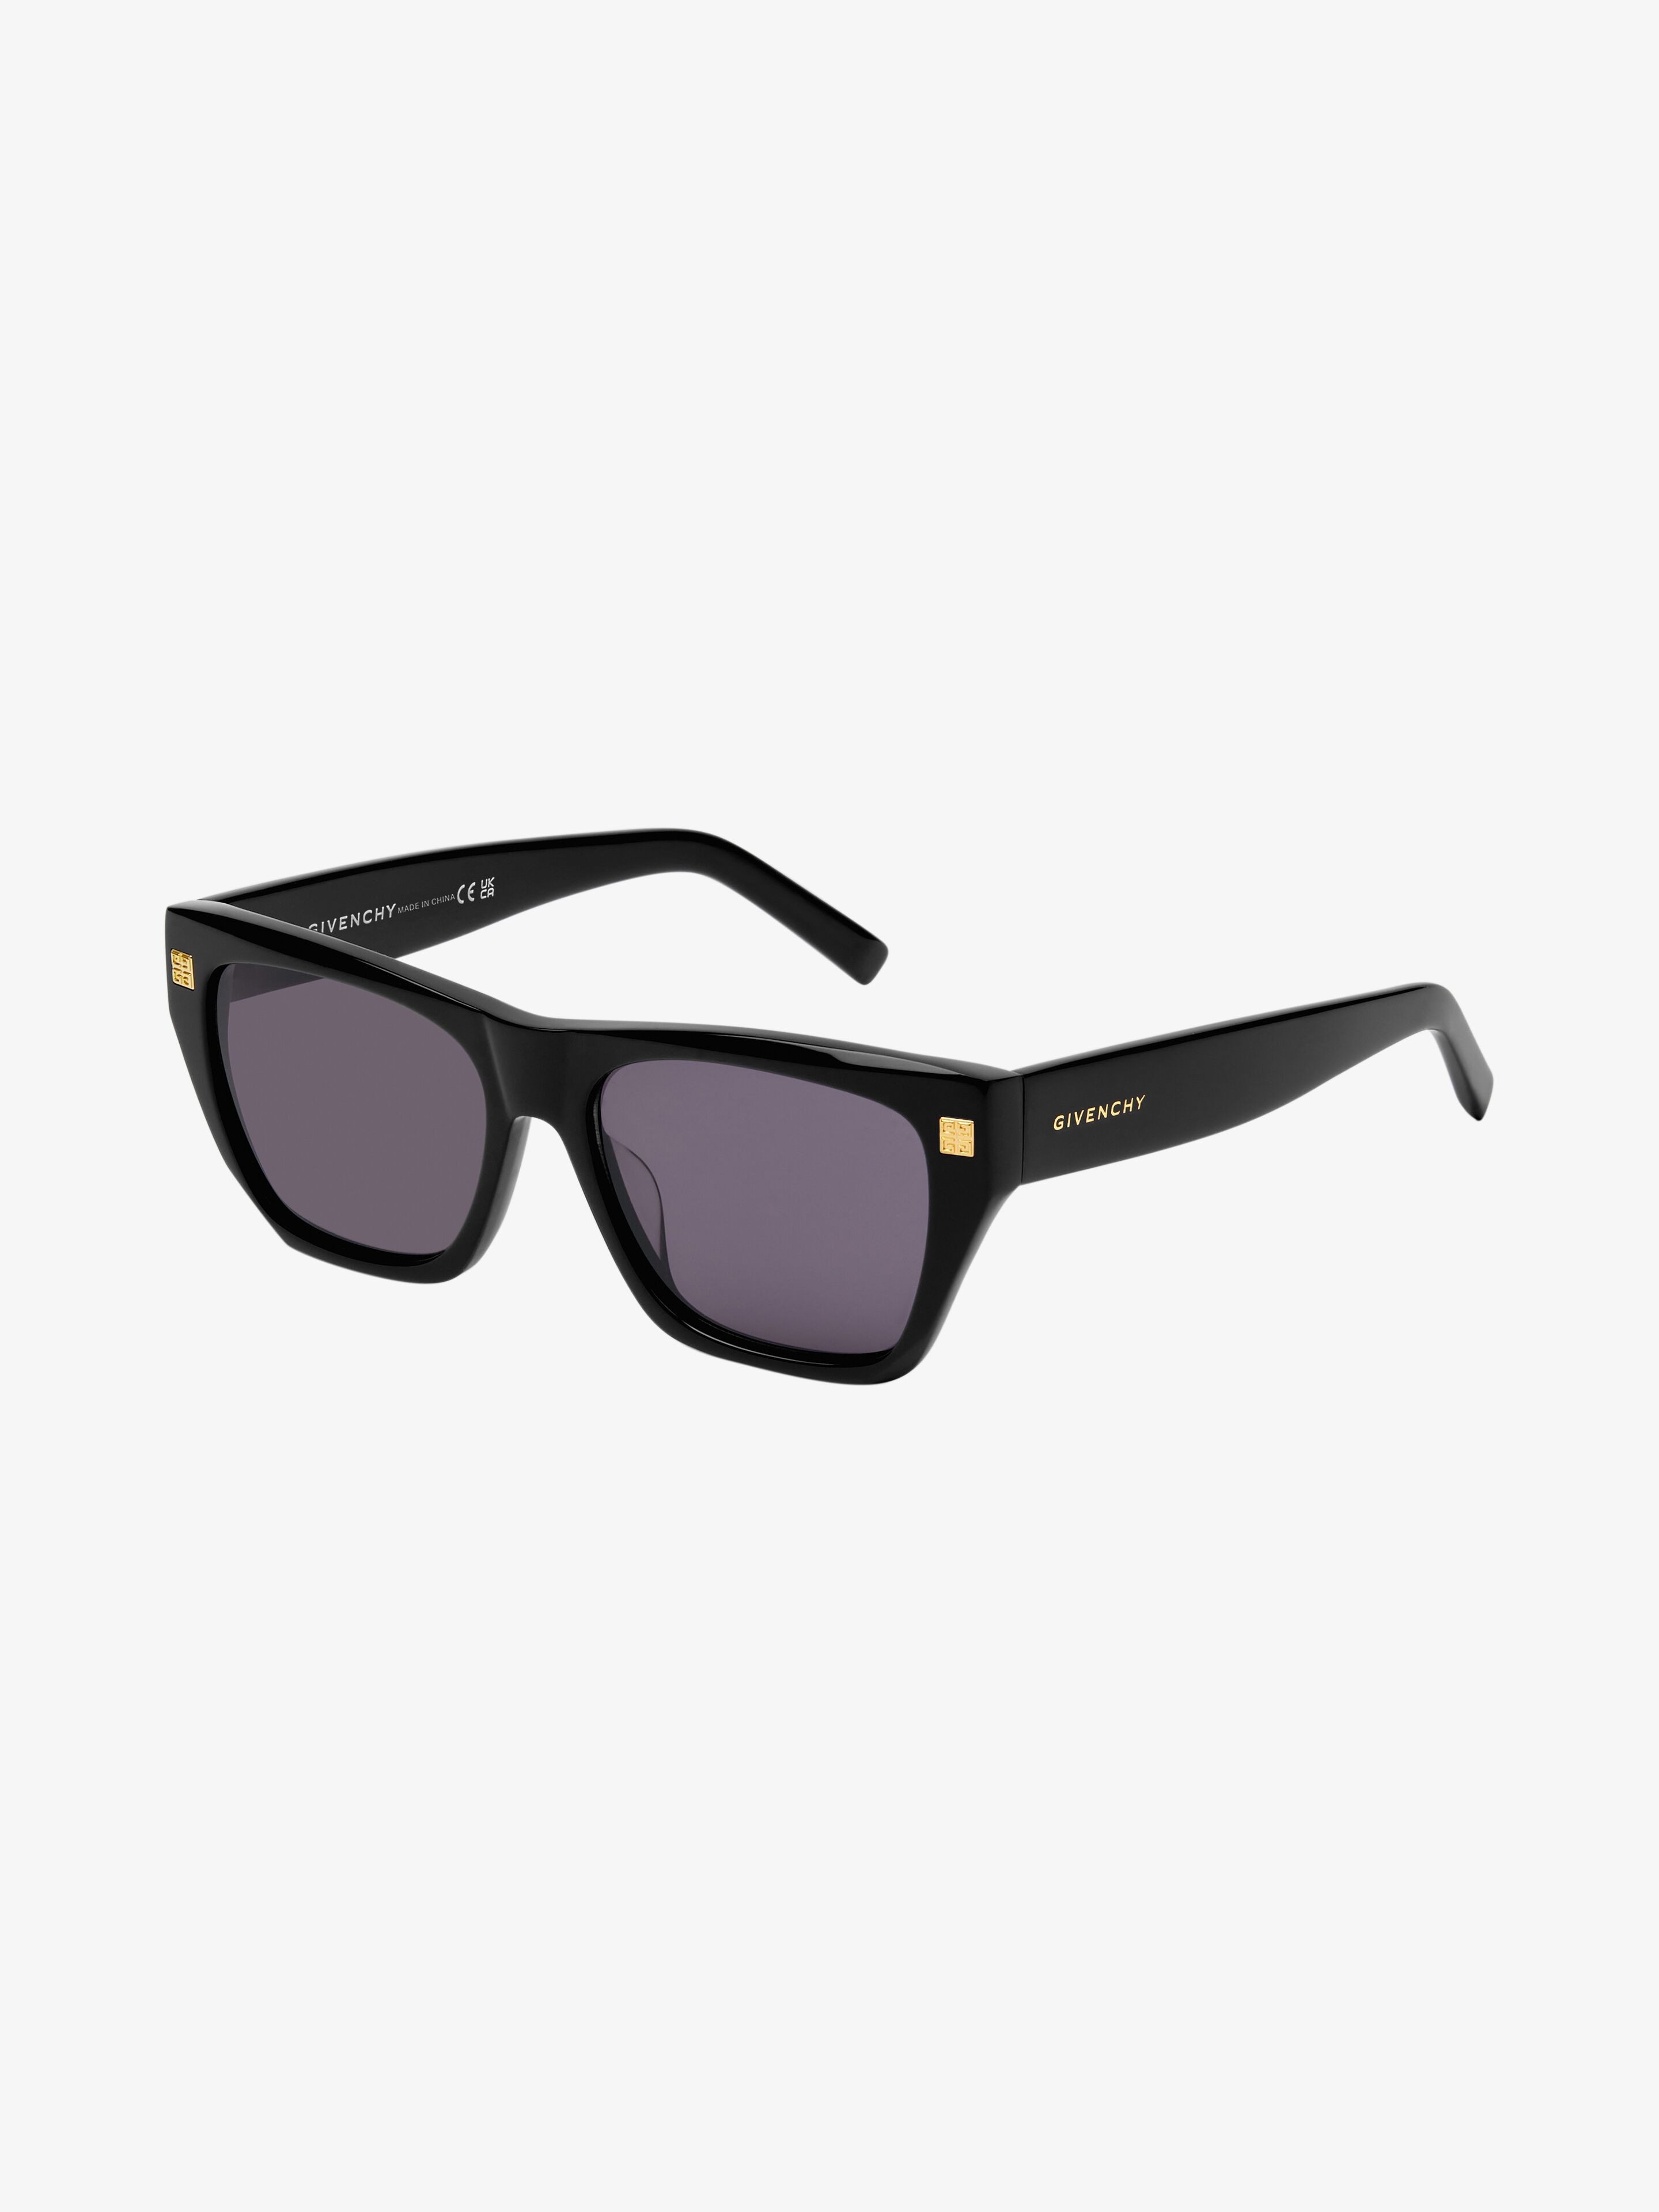 GV Day sunglasses in acetate - black